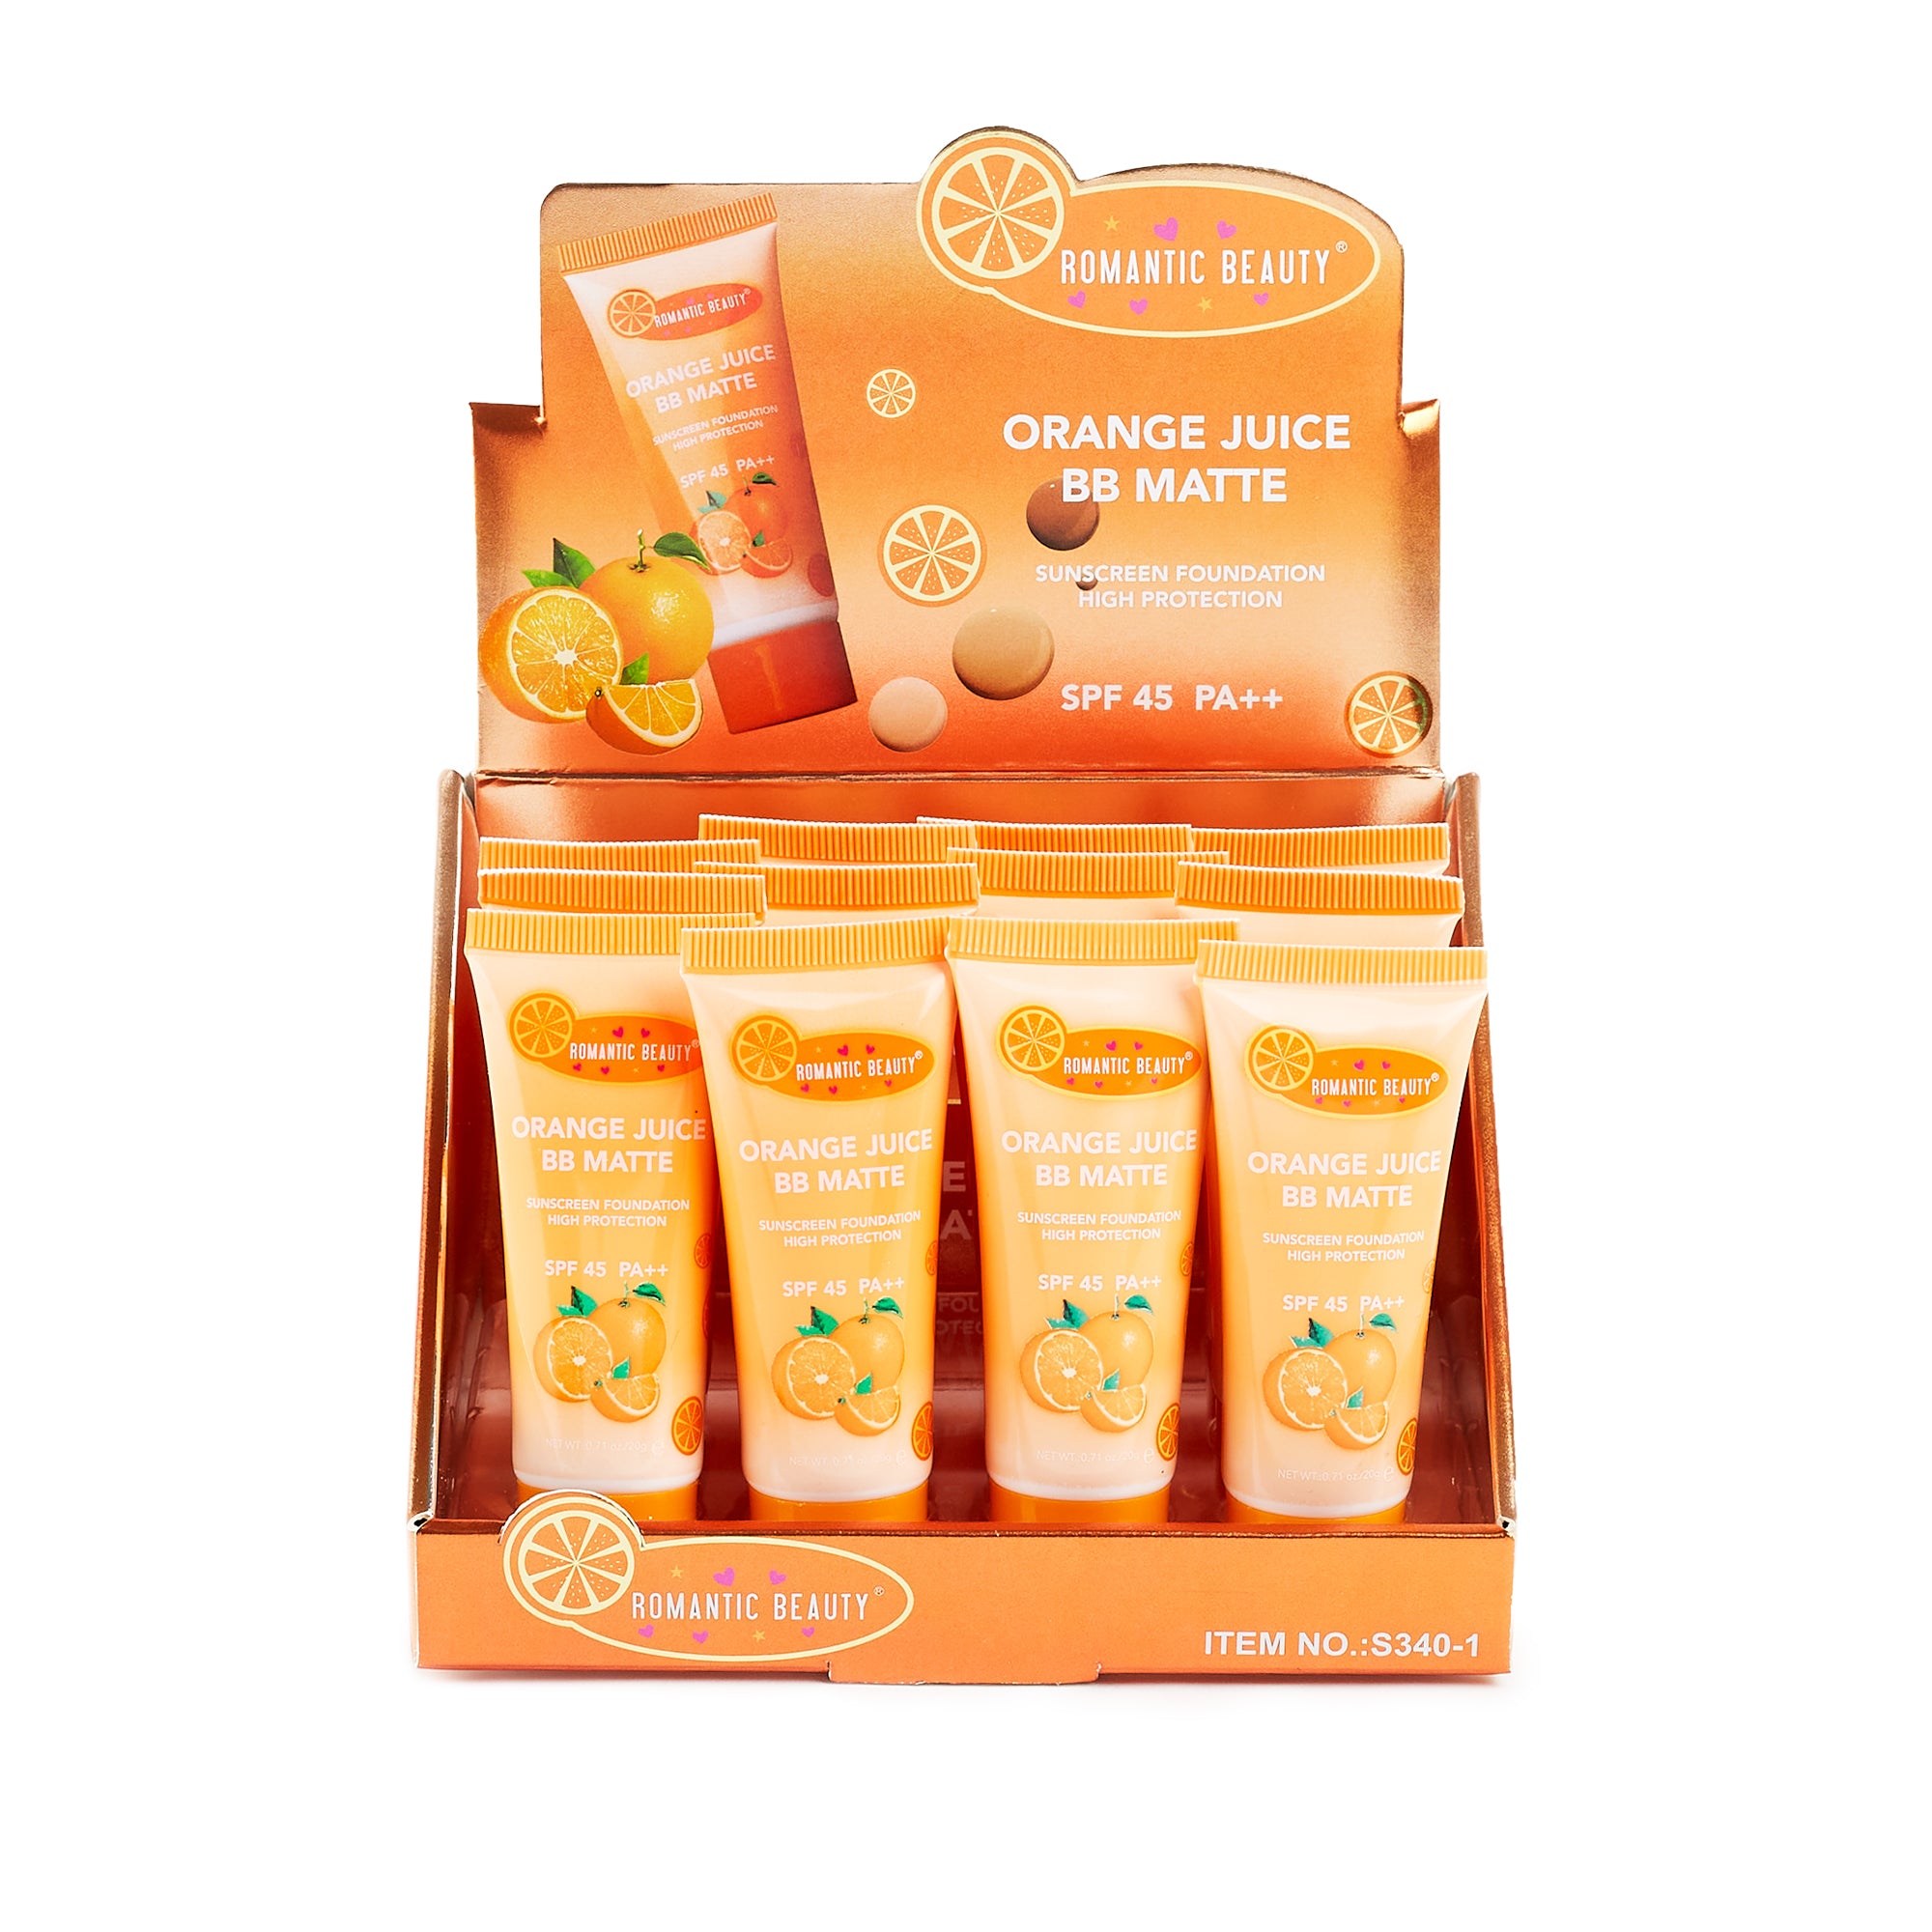 Orange Juice BB Matte Sunscreen Foundation